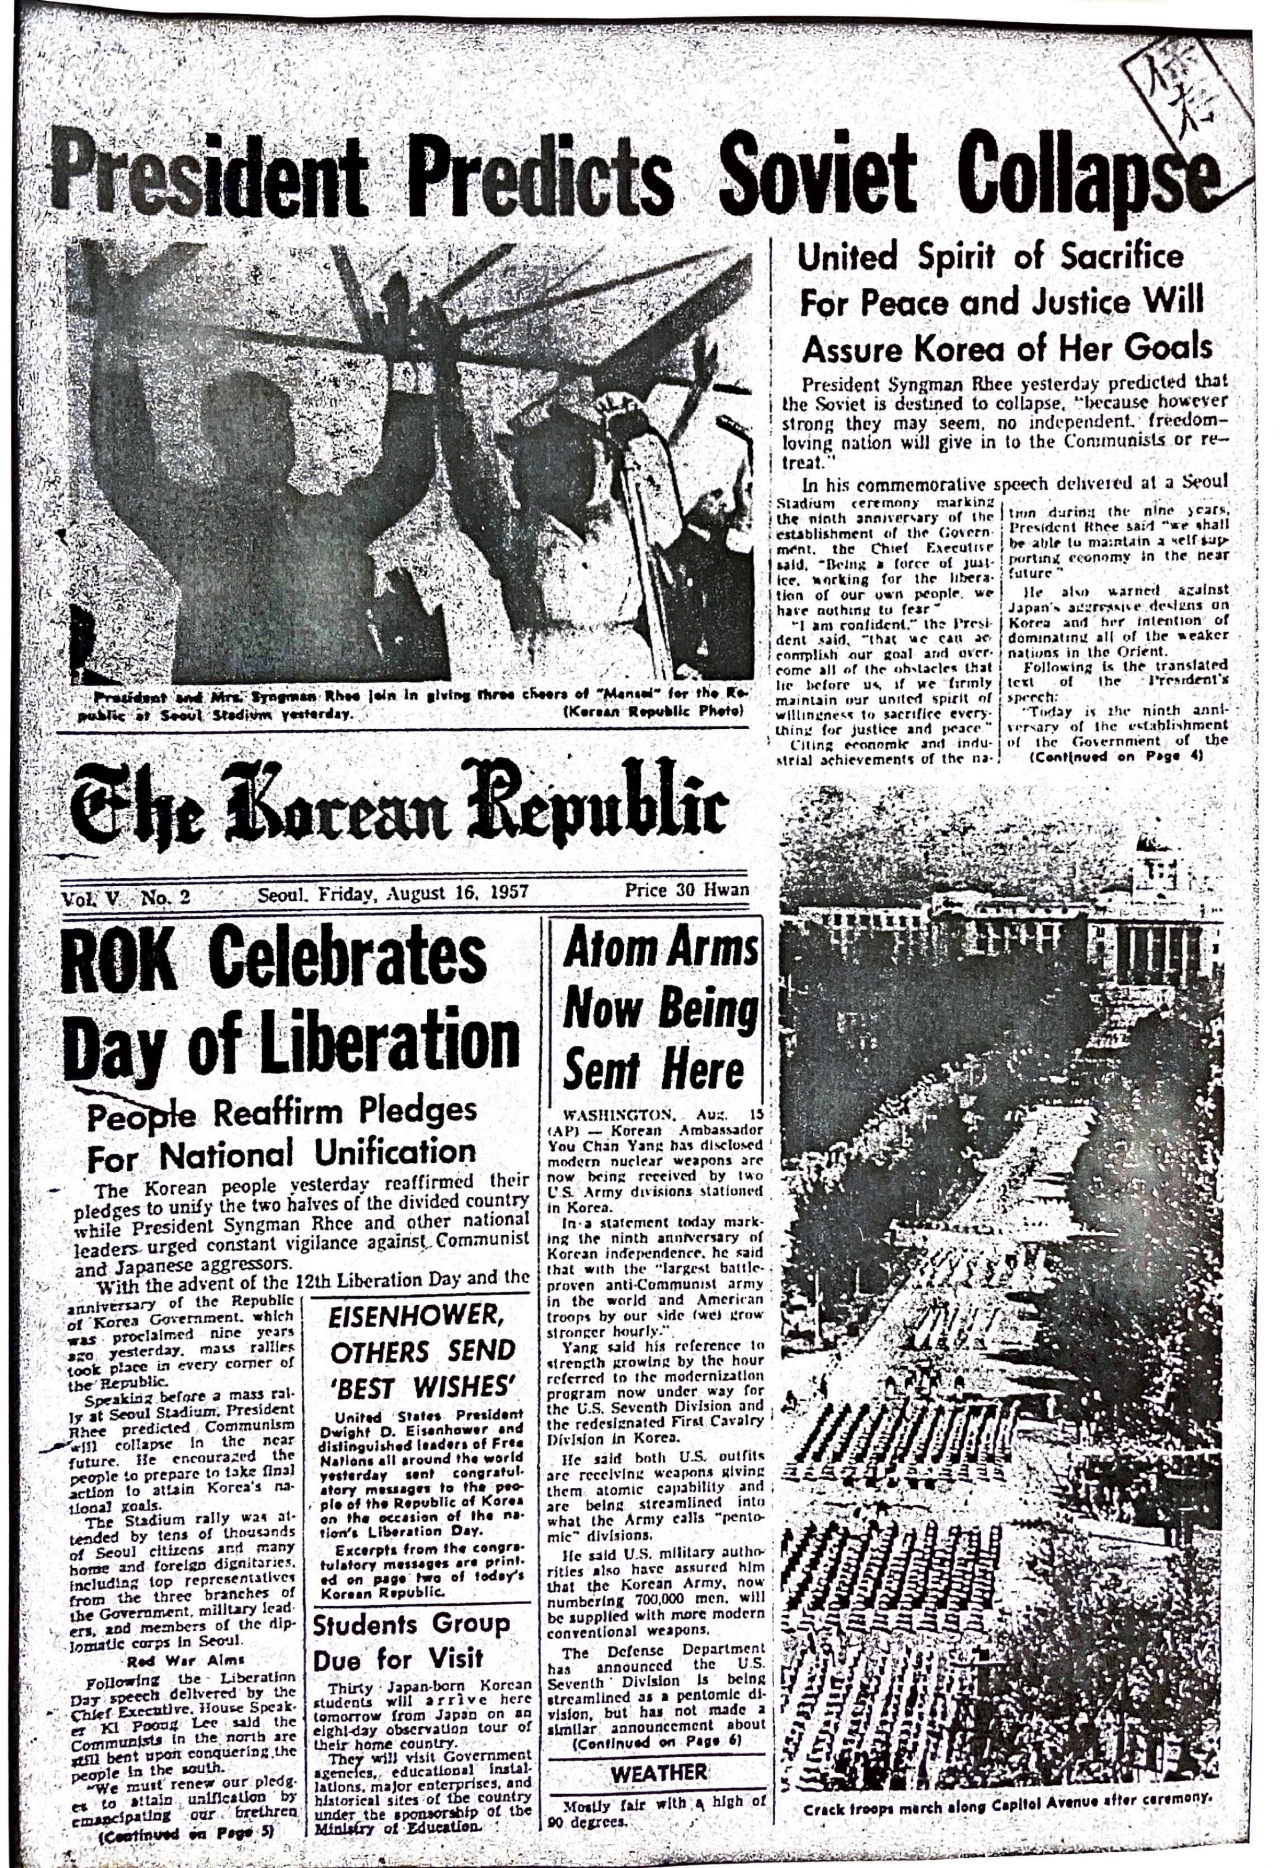 The Aug. 16, 1957 edition of The Korea Republic, now The Korea Herald